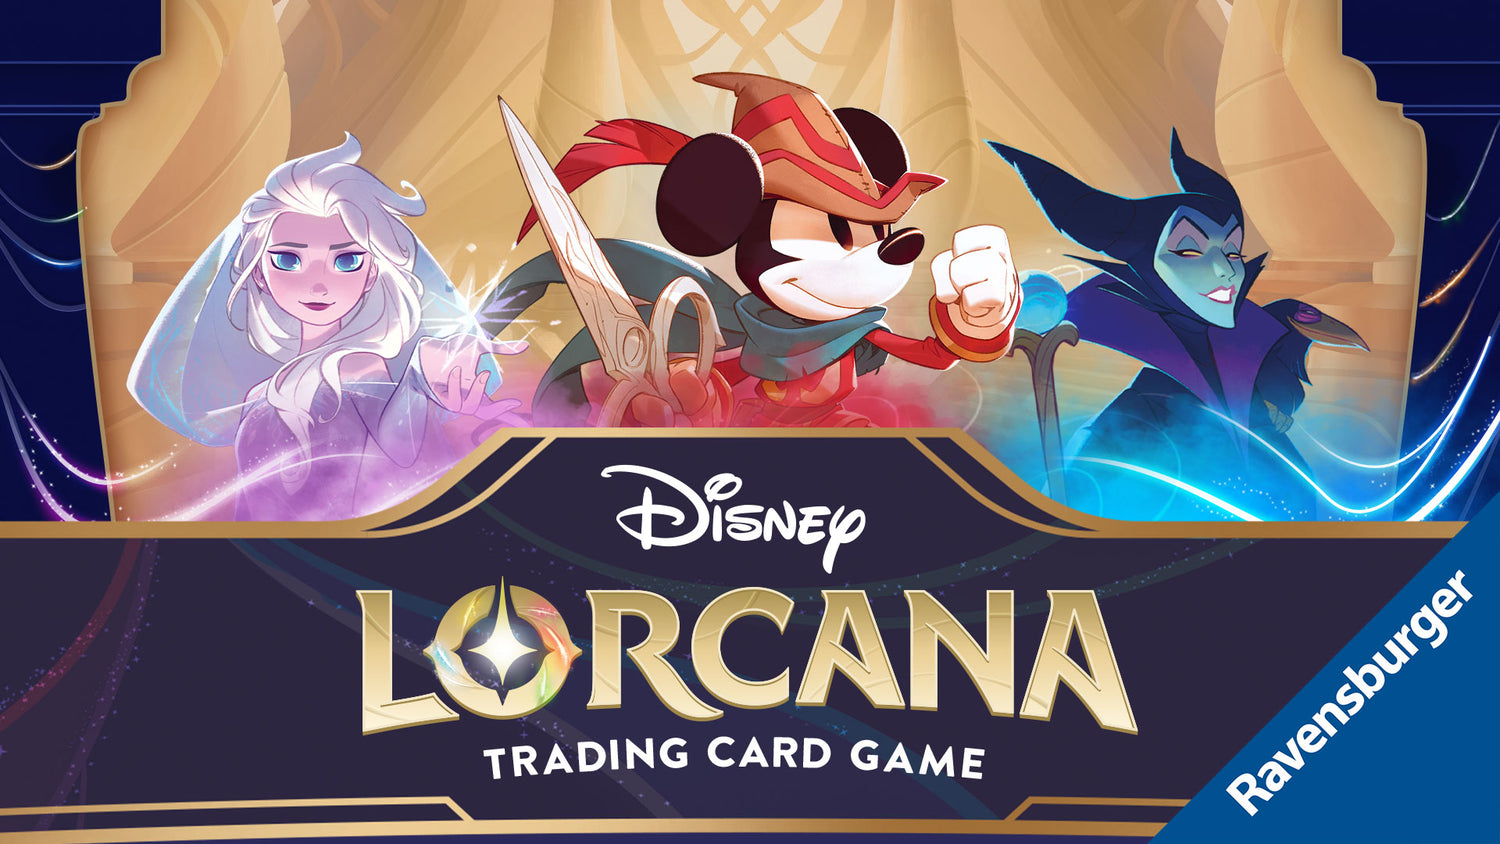 Disney Lorcana Sealed Product